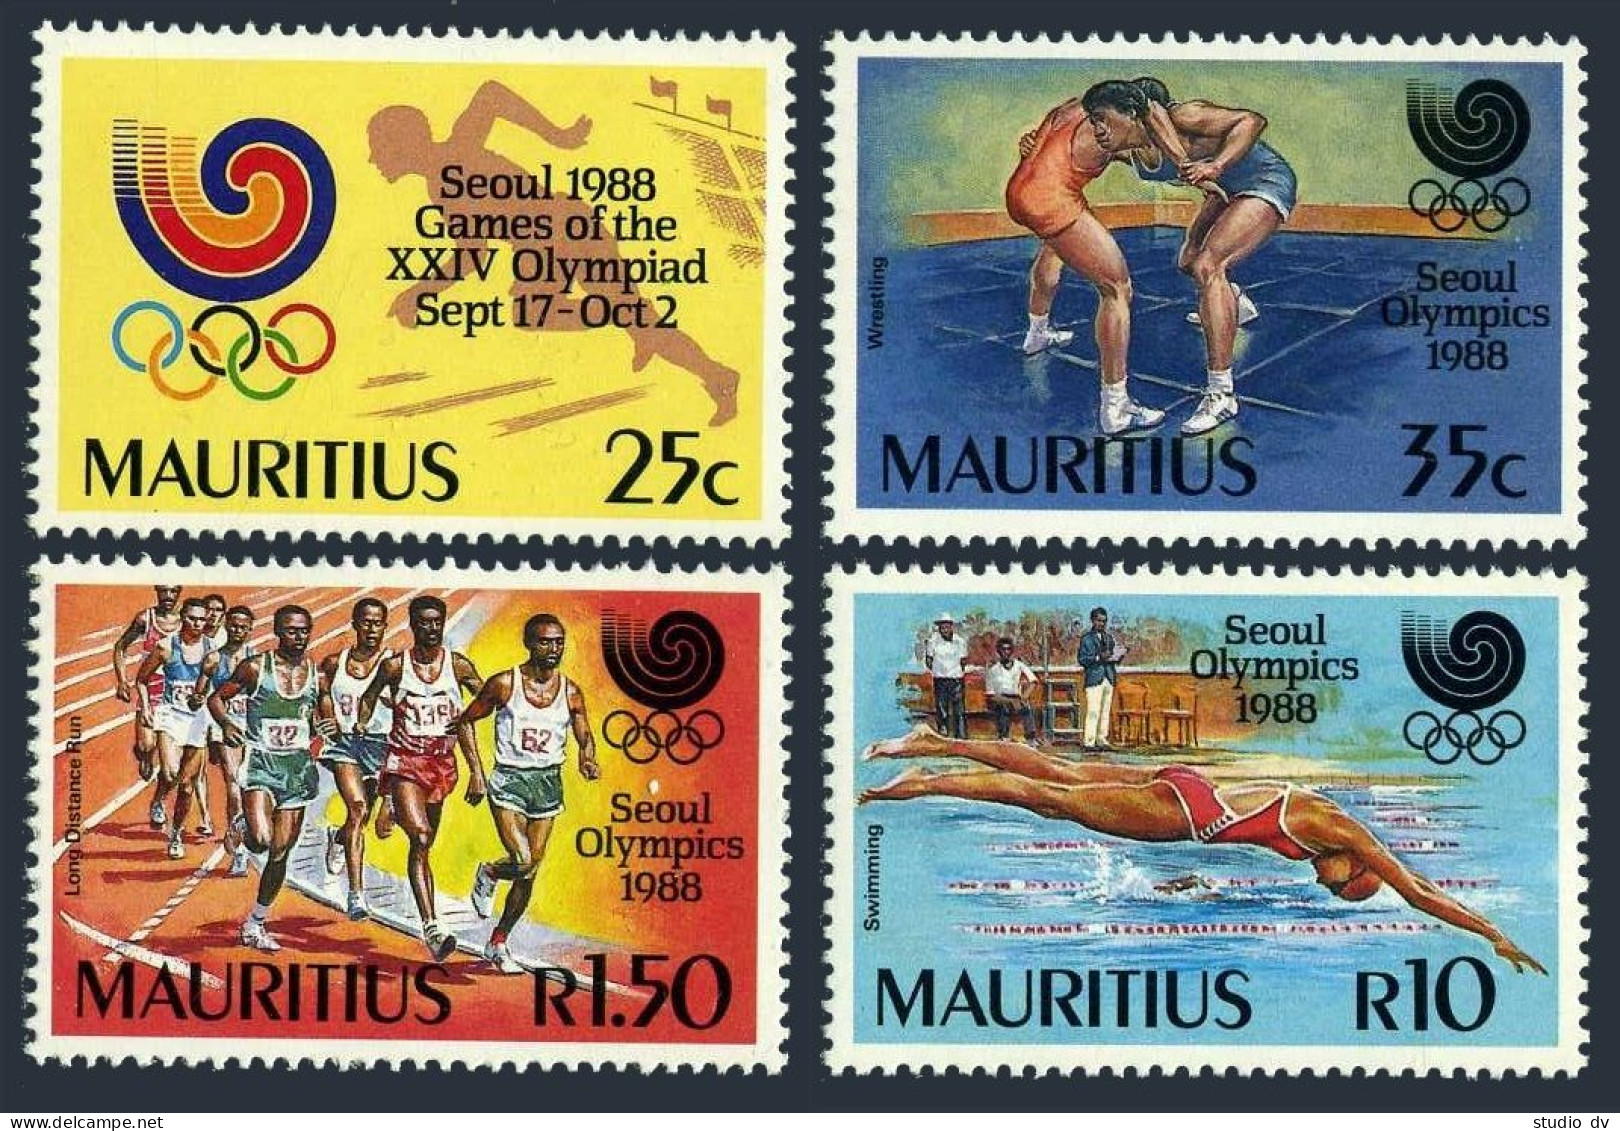 Mauritius 678-681, MNH. Michel 674-677. Olympics Seoul-1988. Wrestling, Swimming - Mauritius (1968-...)